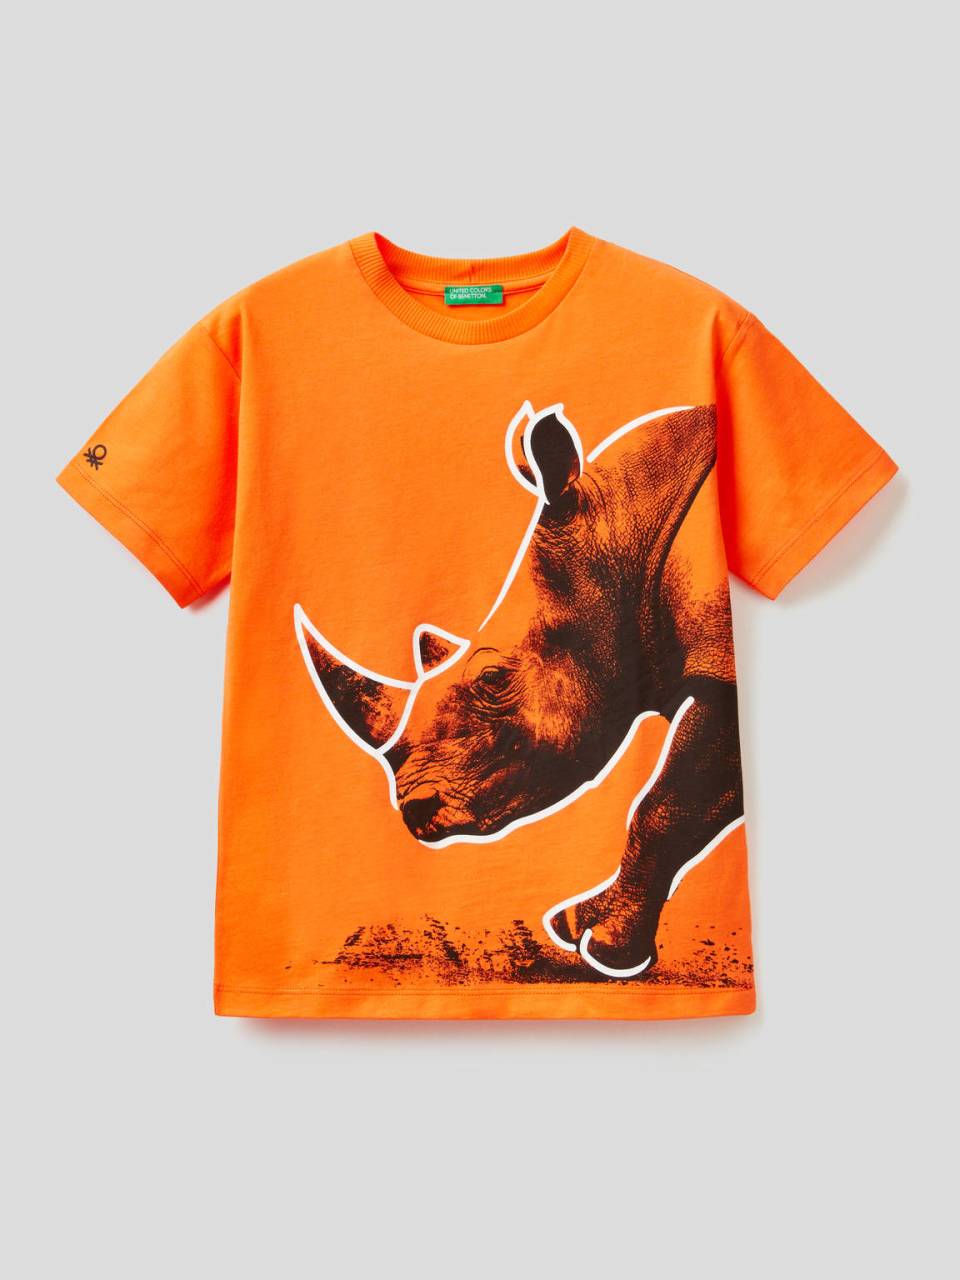 ucb orange t shirt